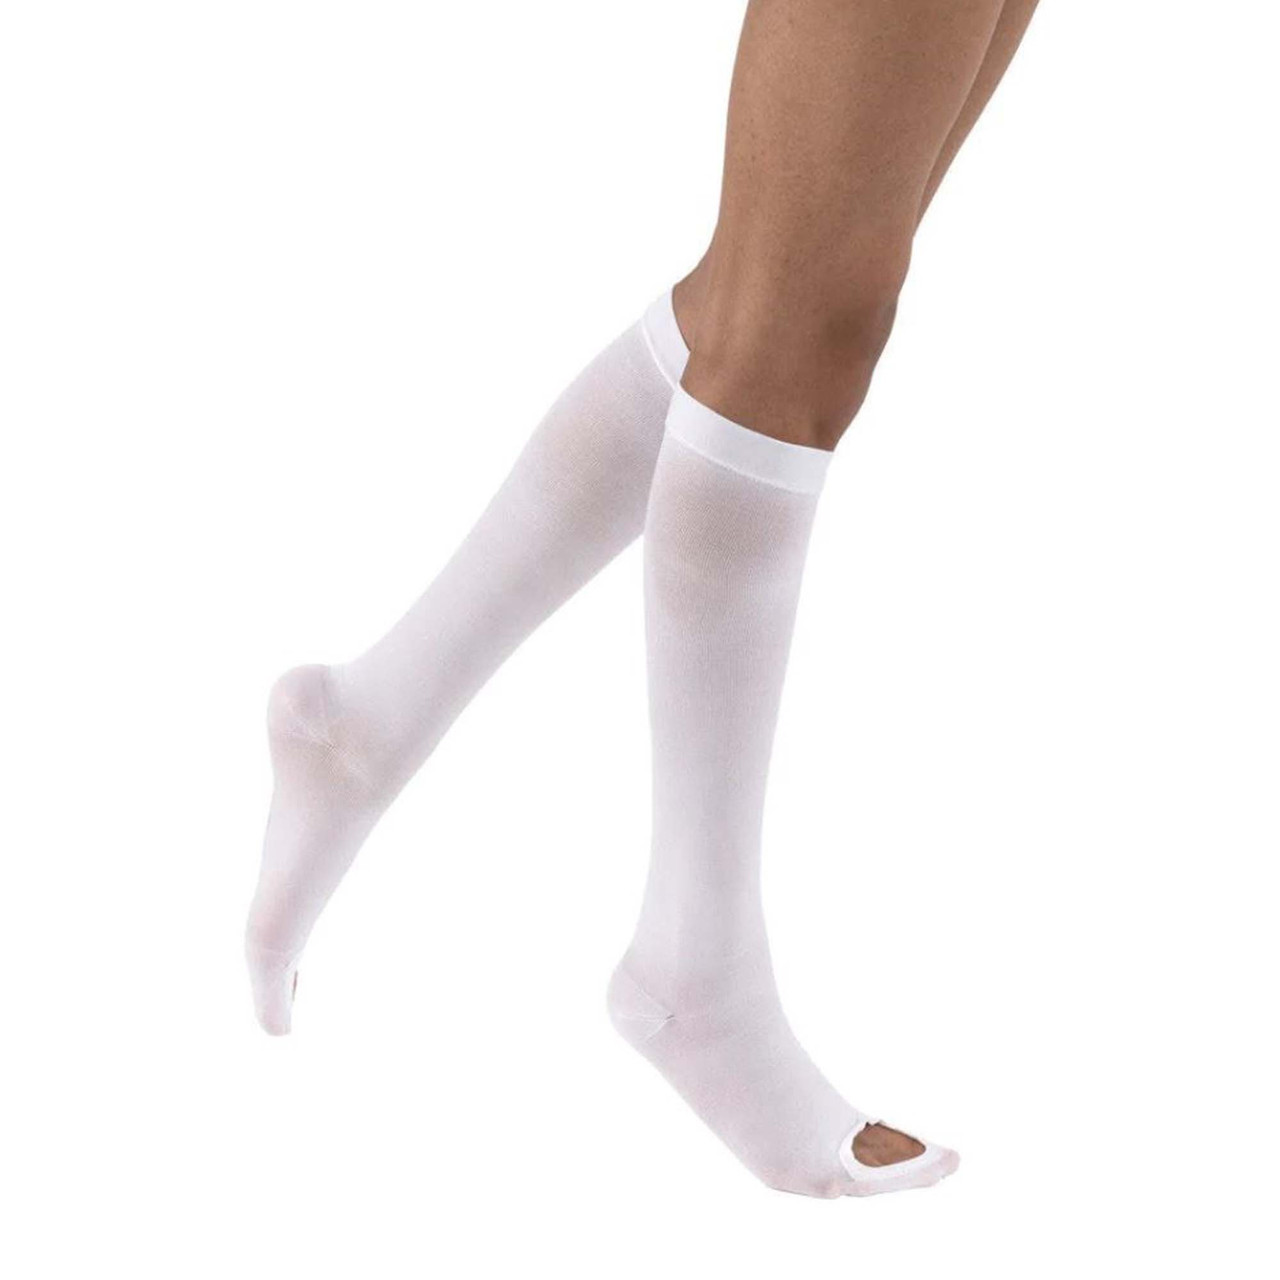 Jobst Anti-Embolism Elastic Stockings - Knee High, Unisex - Simply Medical